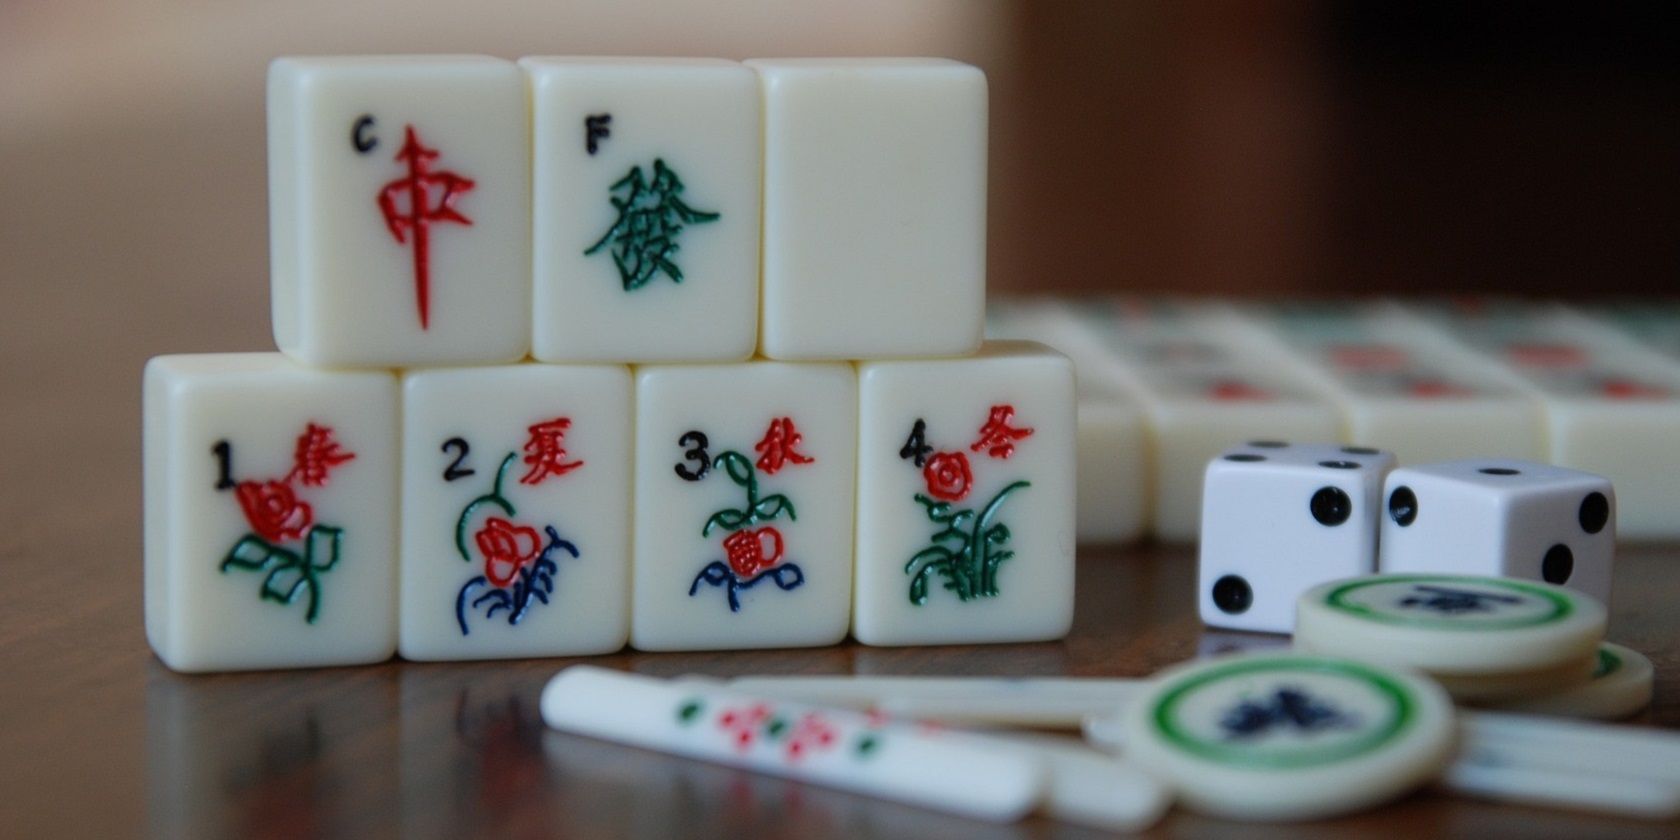 Get Mahjong The Classic - Microsoft Store